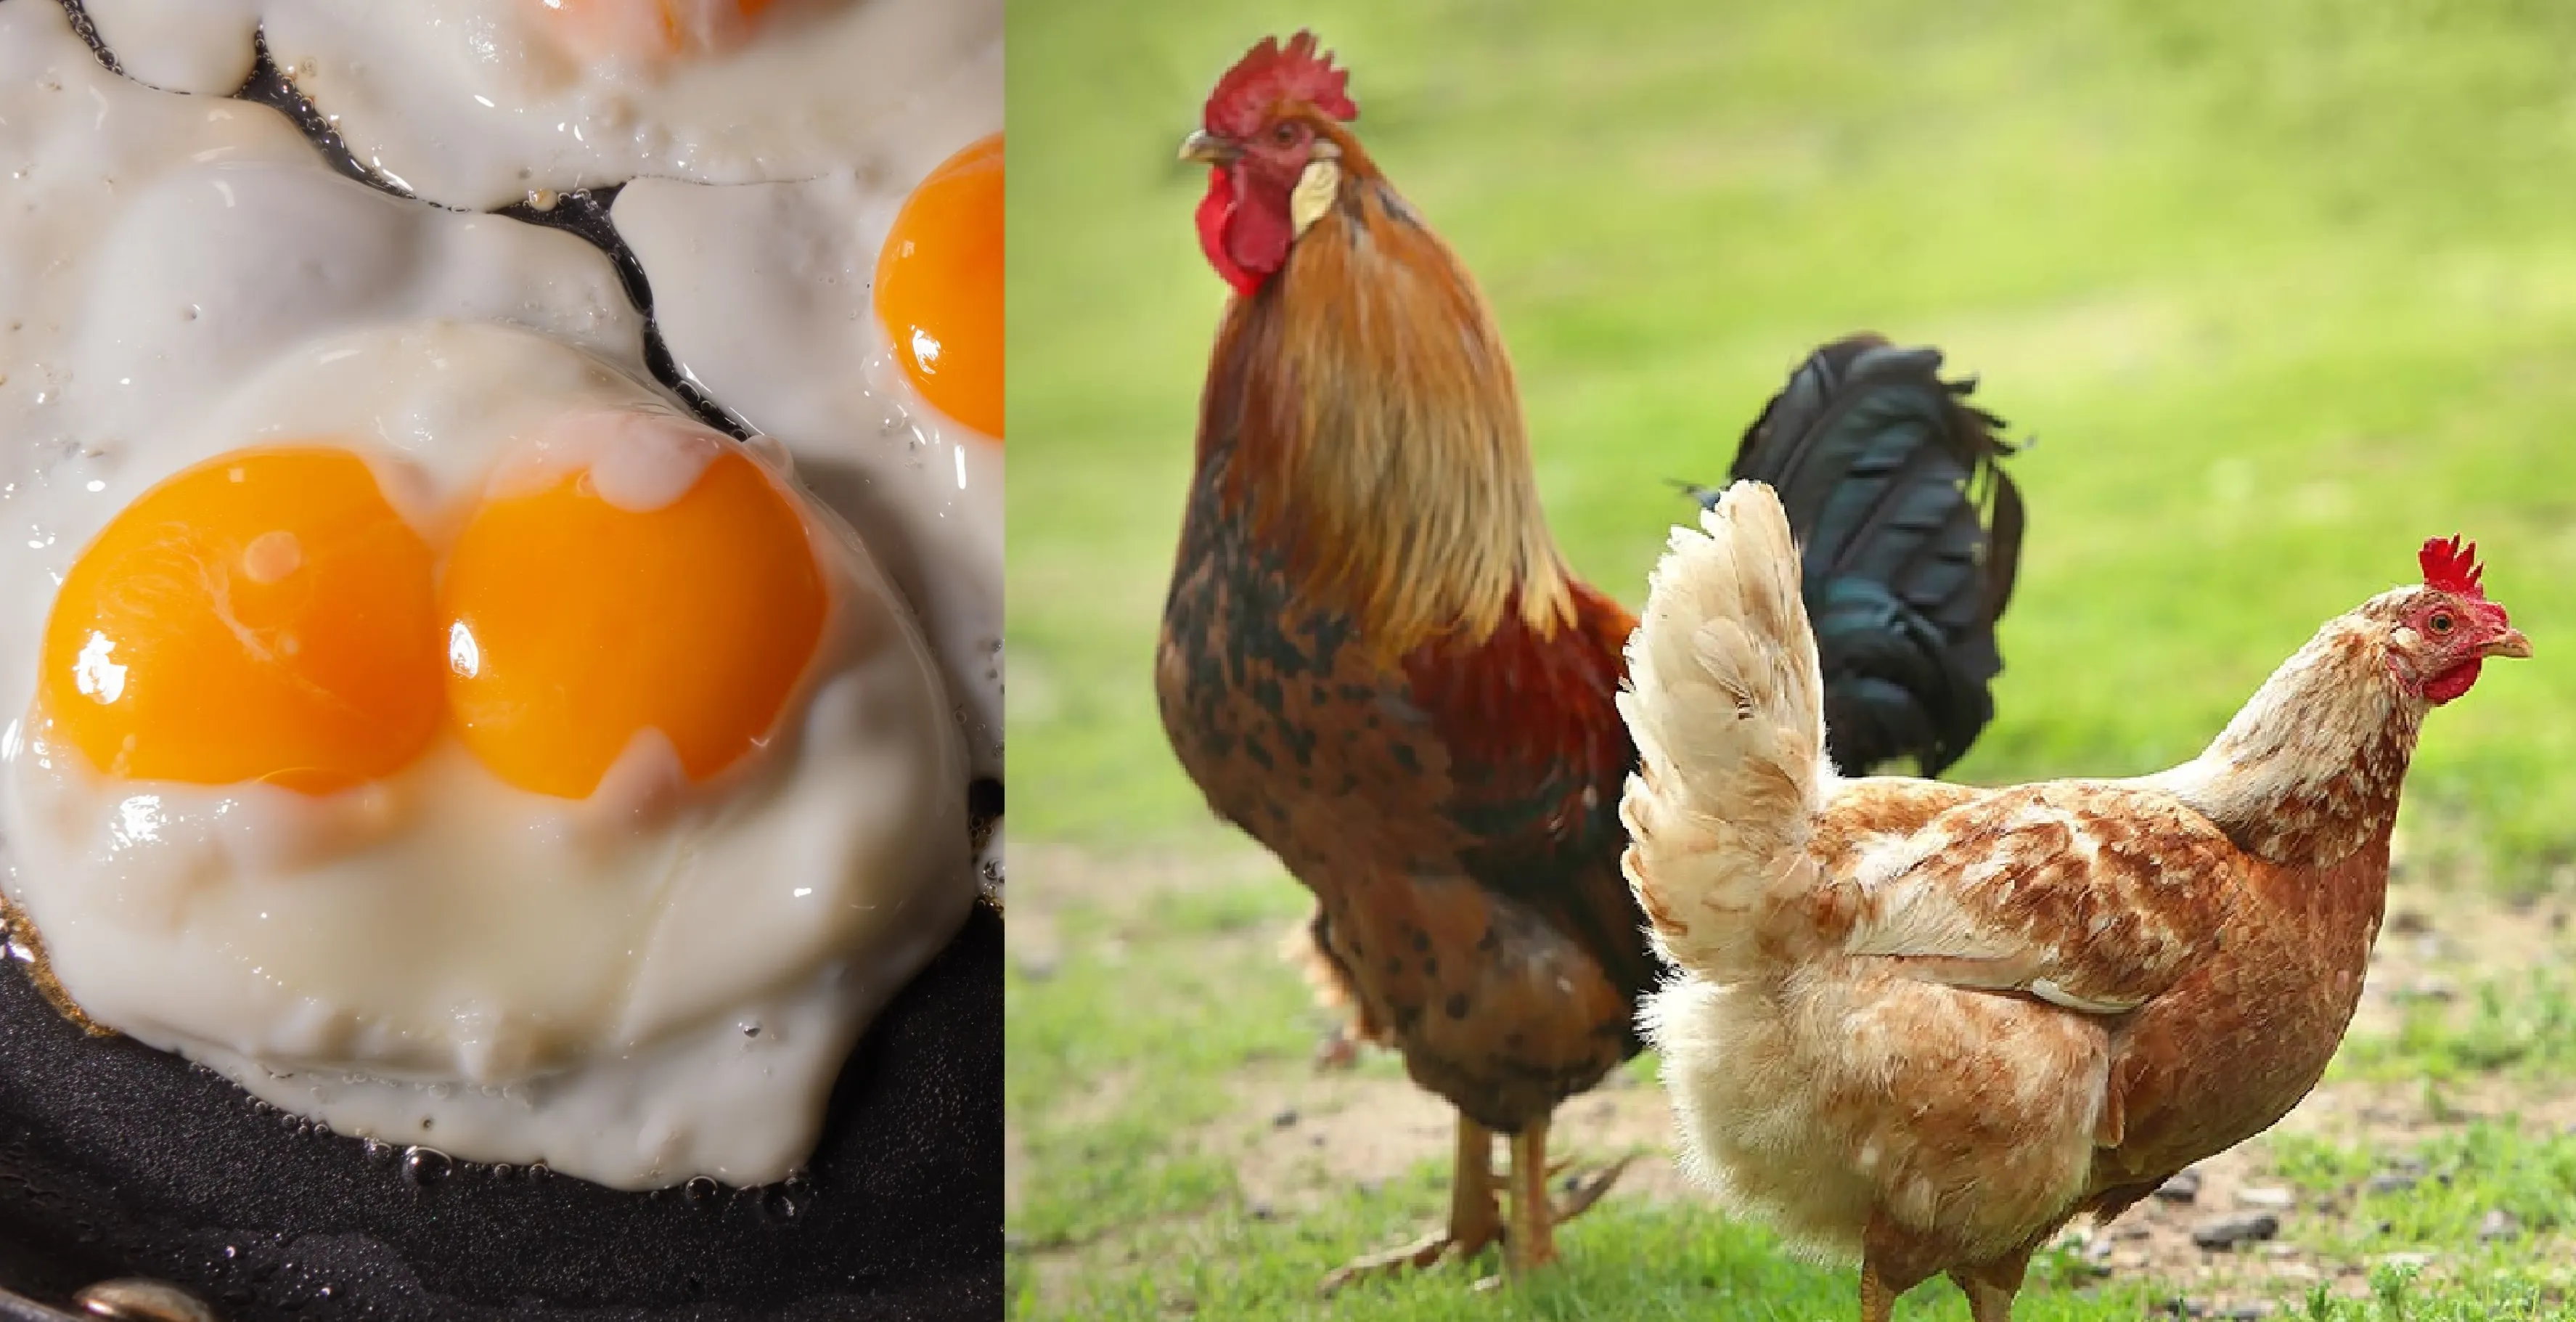 egg with double yolk